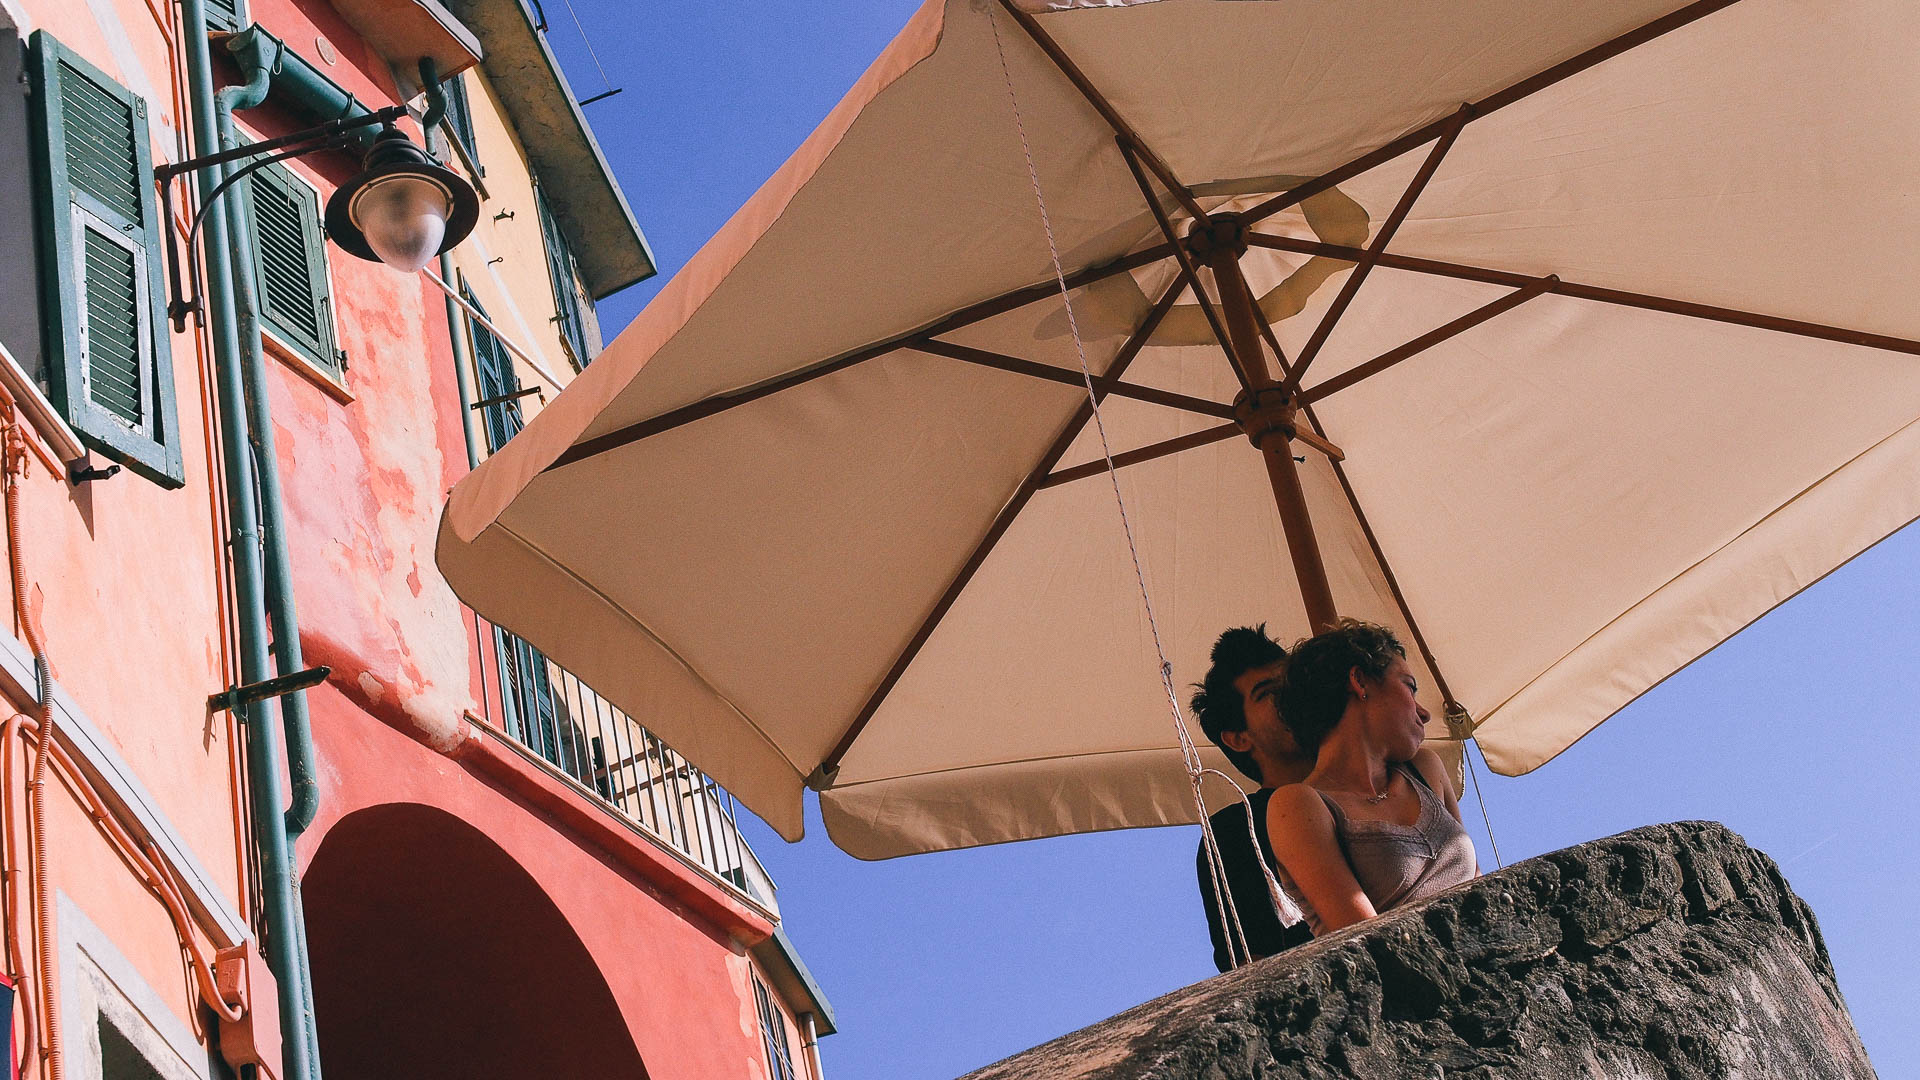 Cinque Terre, Italy|klyuen travel photography